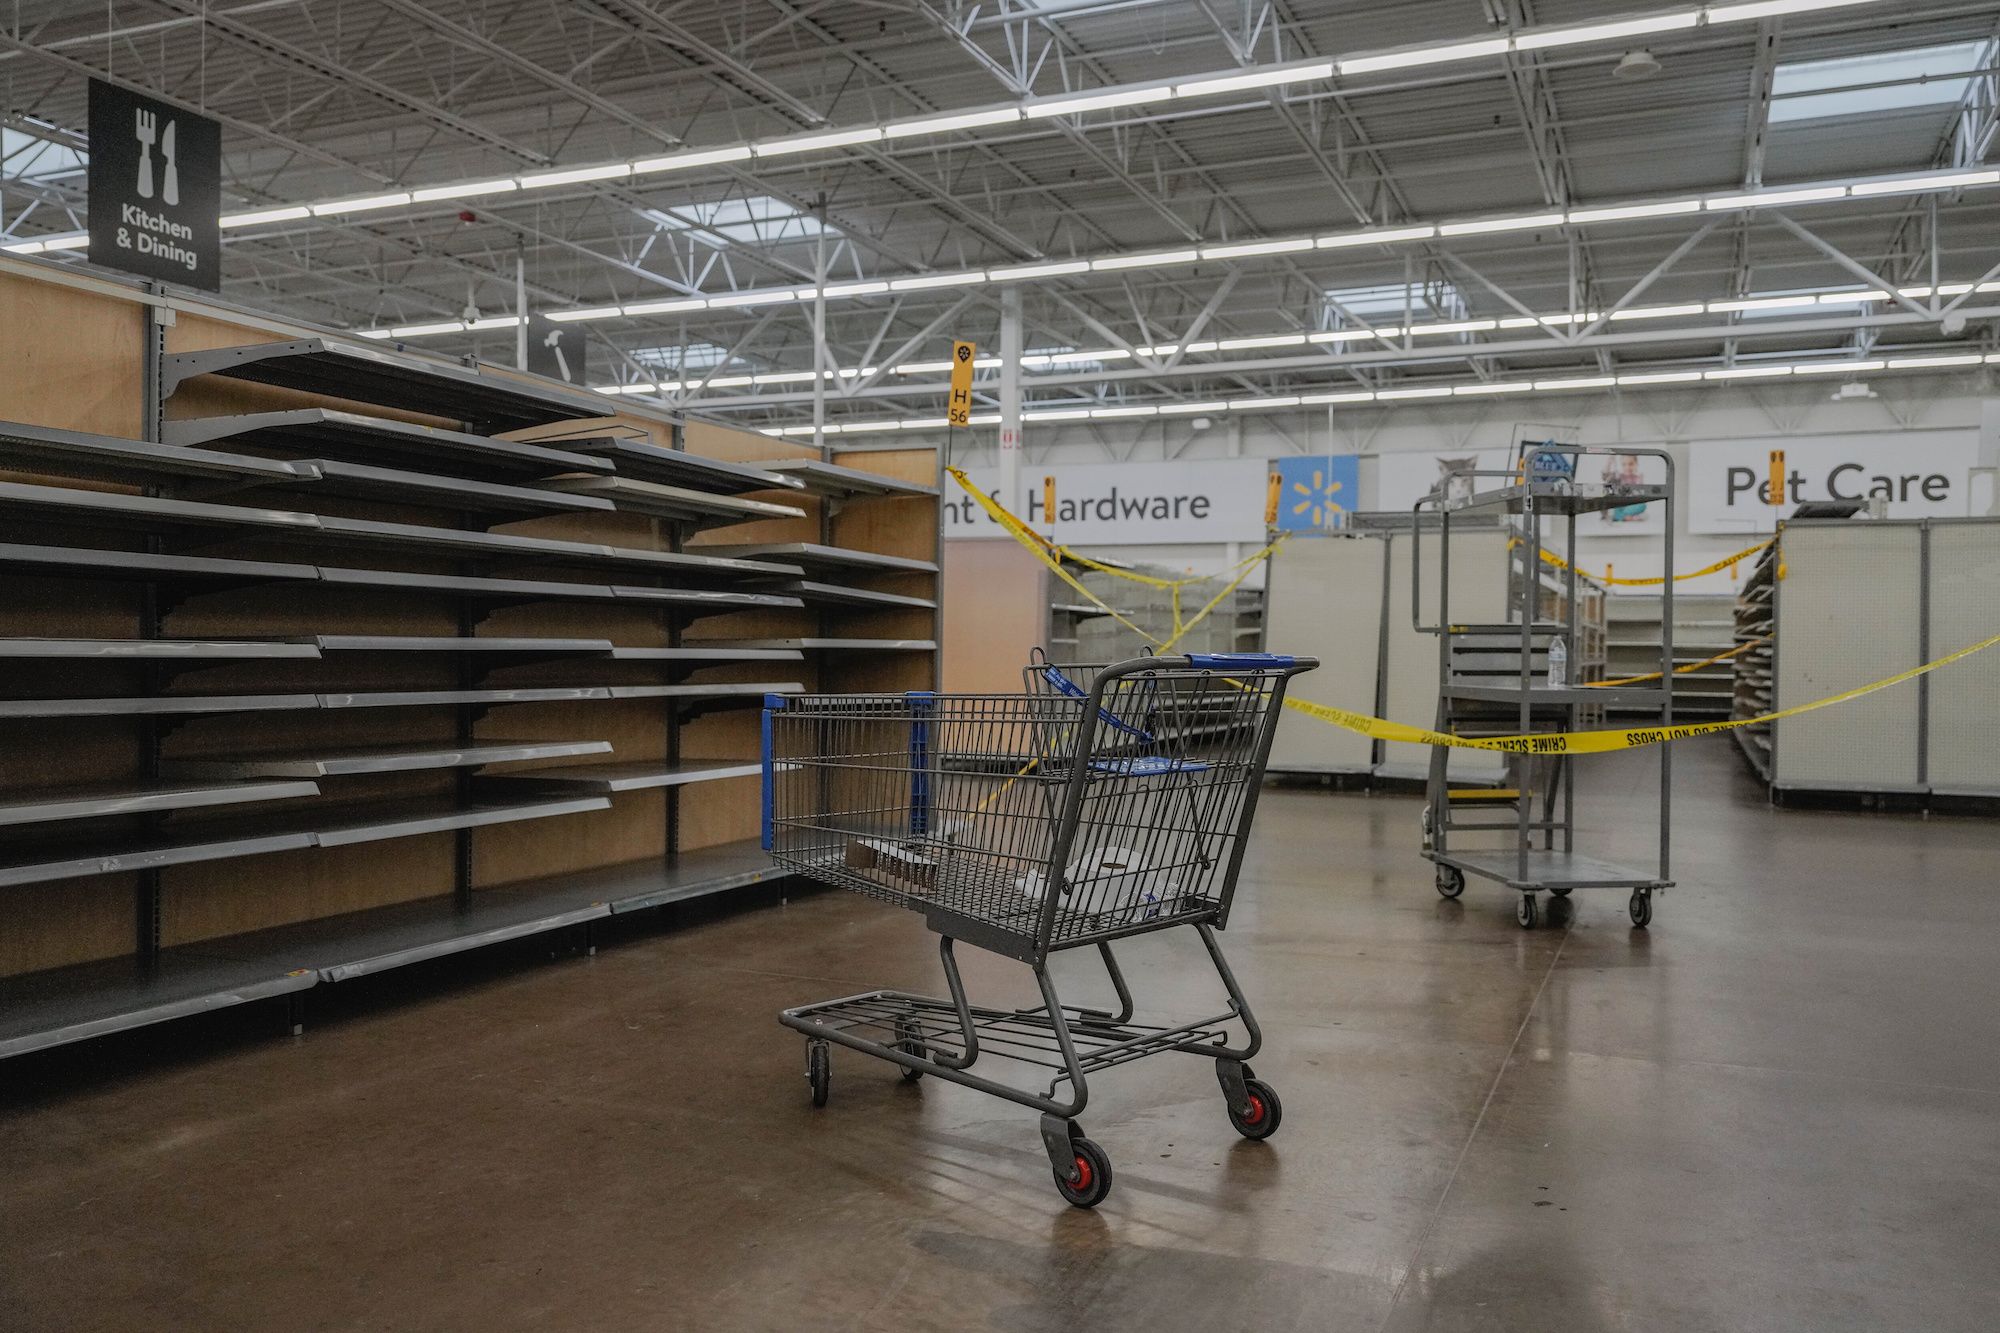 Market Basket to replace Massachusetts Walmart store that's closing